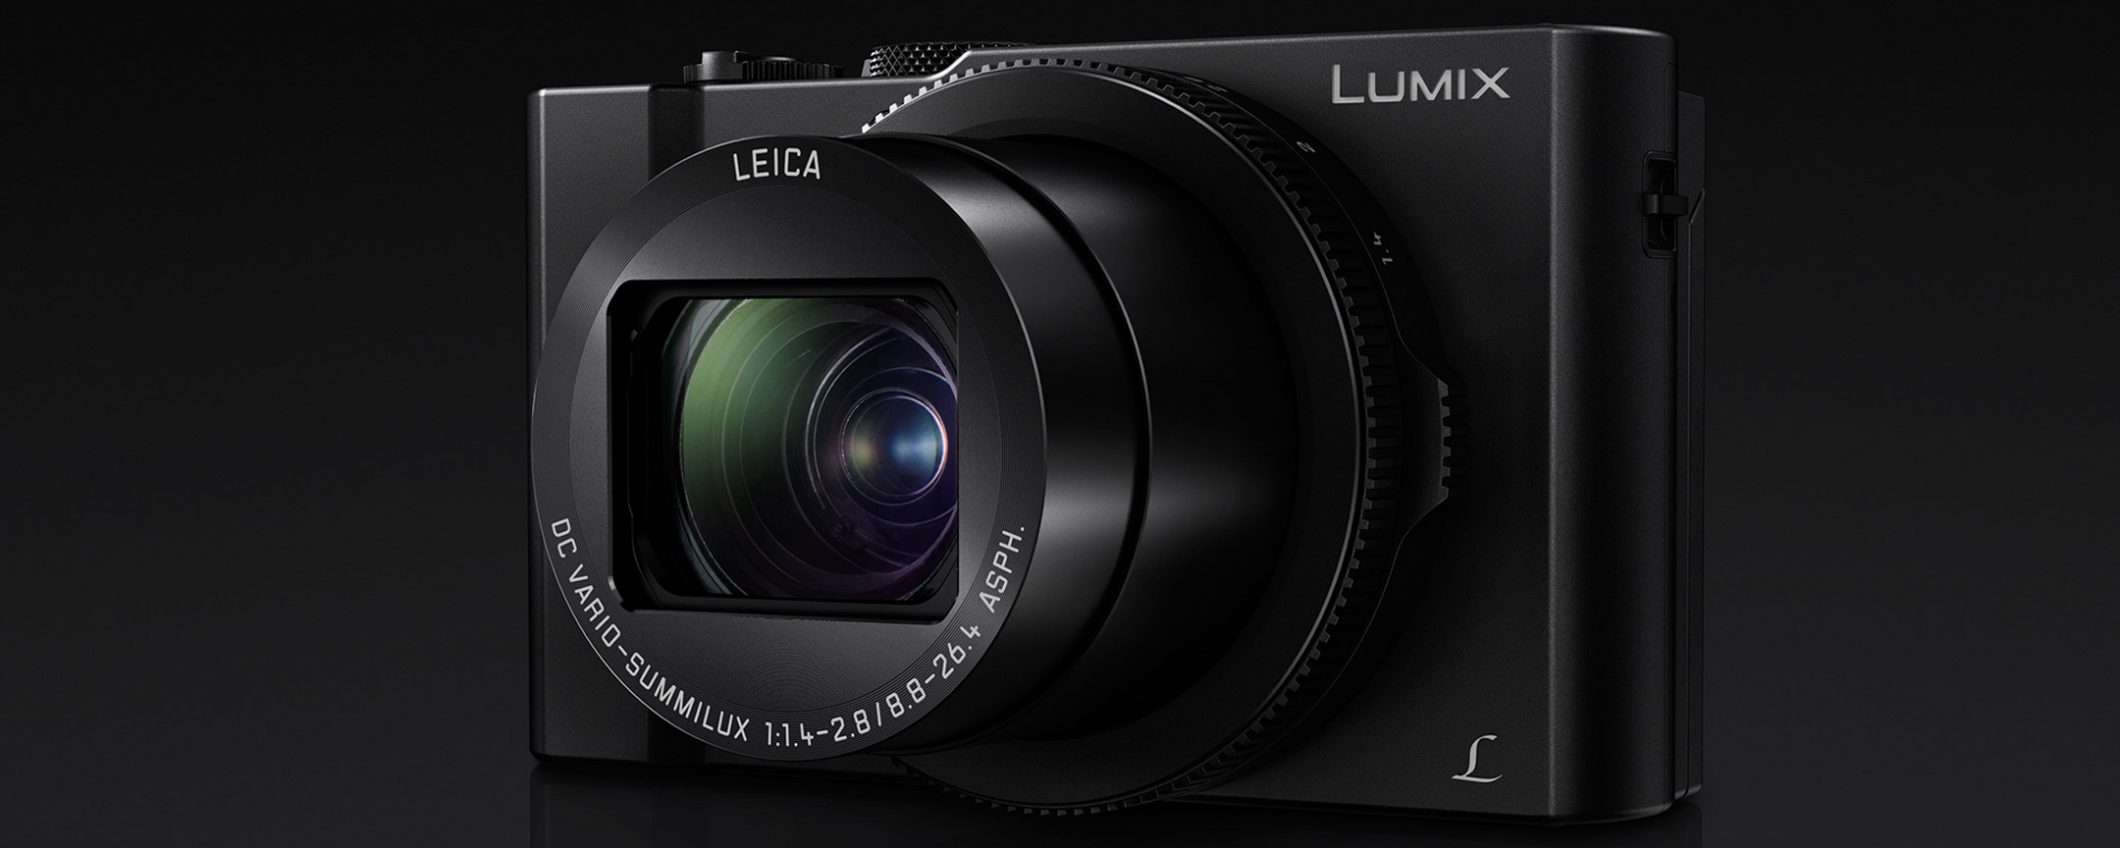 Black Friday: Panasonic Lumix DMC-LX15 a 364 euro